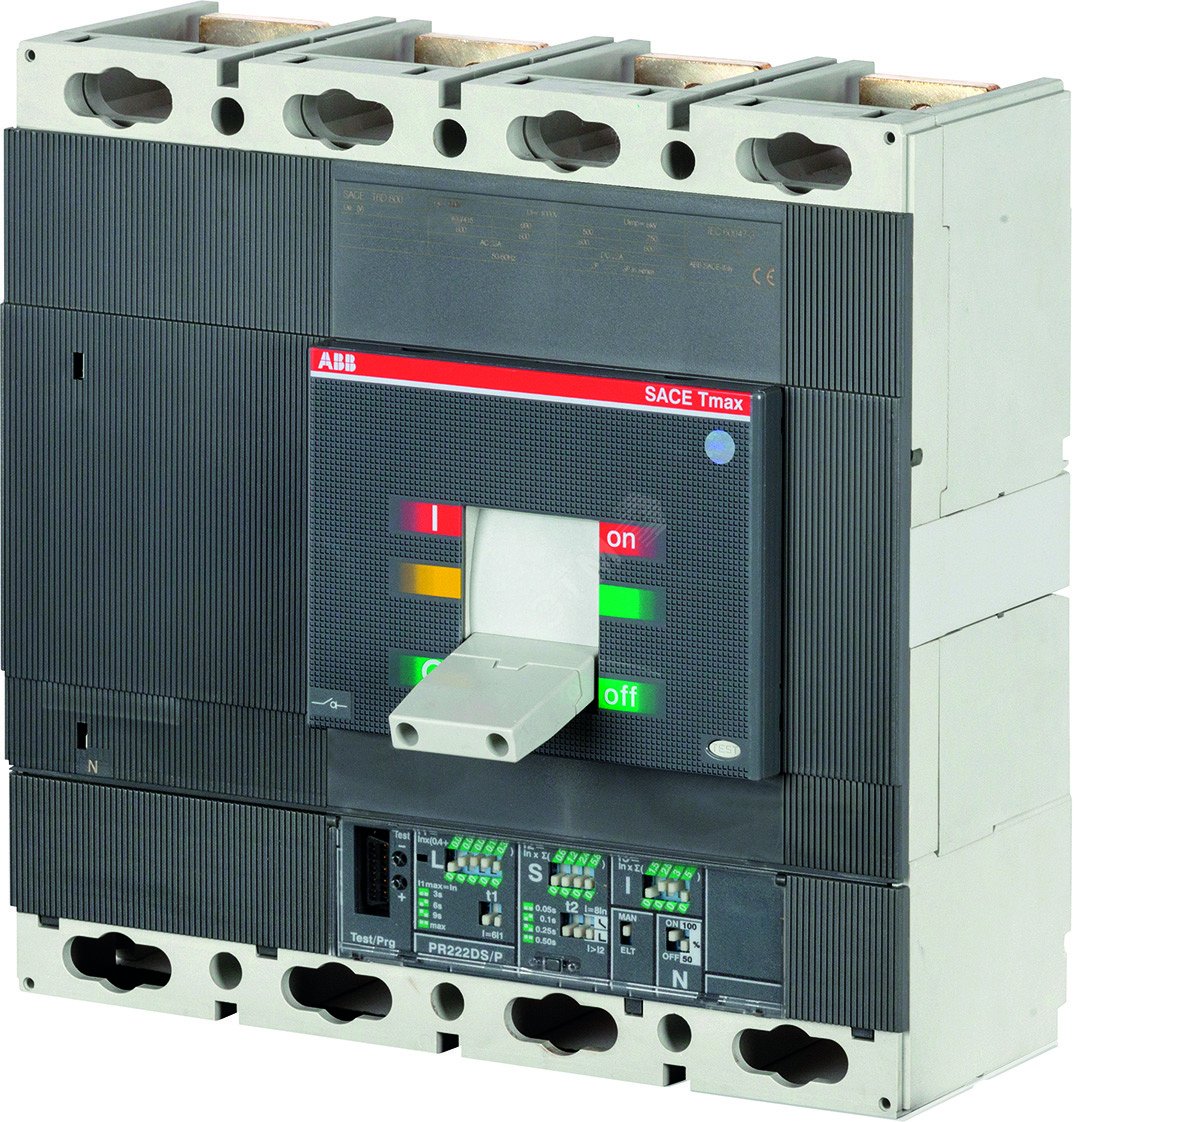 Автоматический выключатель abb 1. ABB 630a автоматический выключатель. Автомат SACE t4n 320 ABB. Автомат силовой ABB 800 TMAX. Автоматический выключатель силовой ABB 3п a1c 125 TMF 100-1000 3p.